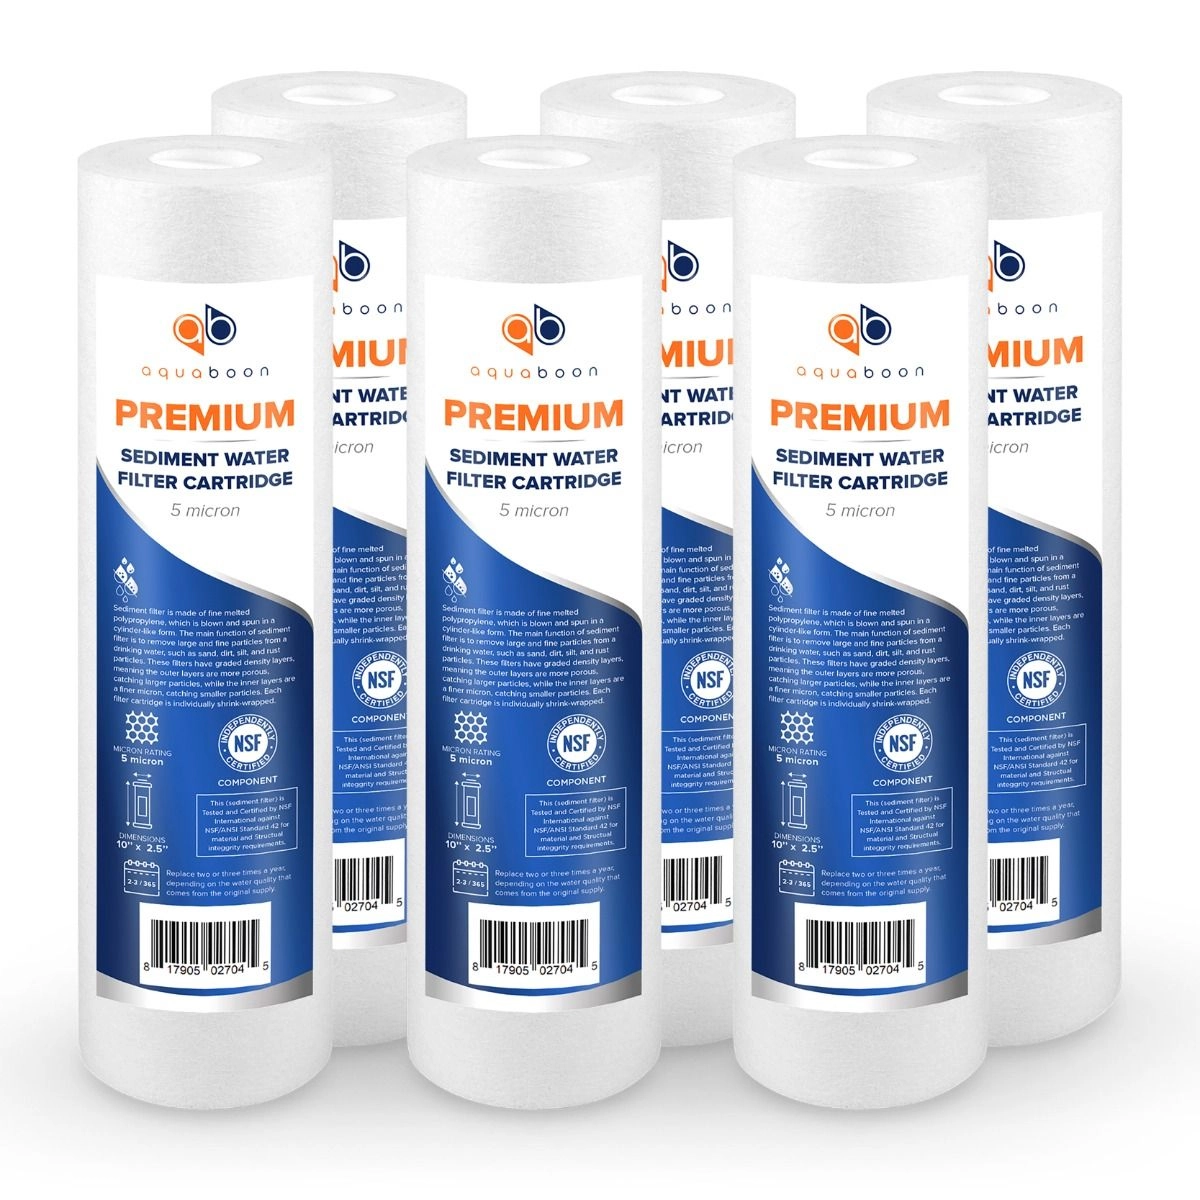 6 Pack Of Aquaboon Premium NSF CERTIFIED 5 Micron 10 x 2.5 Inch Sediment Water Filter Cartridge